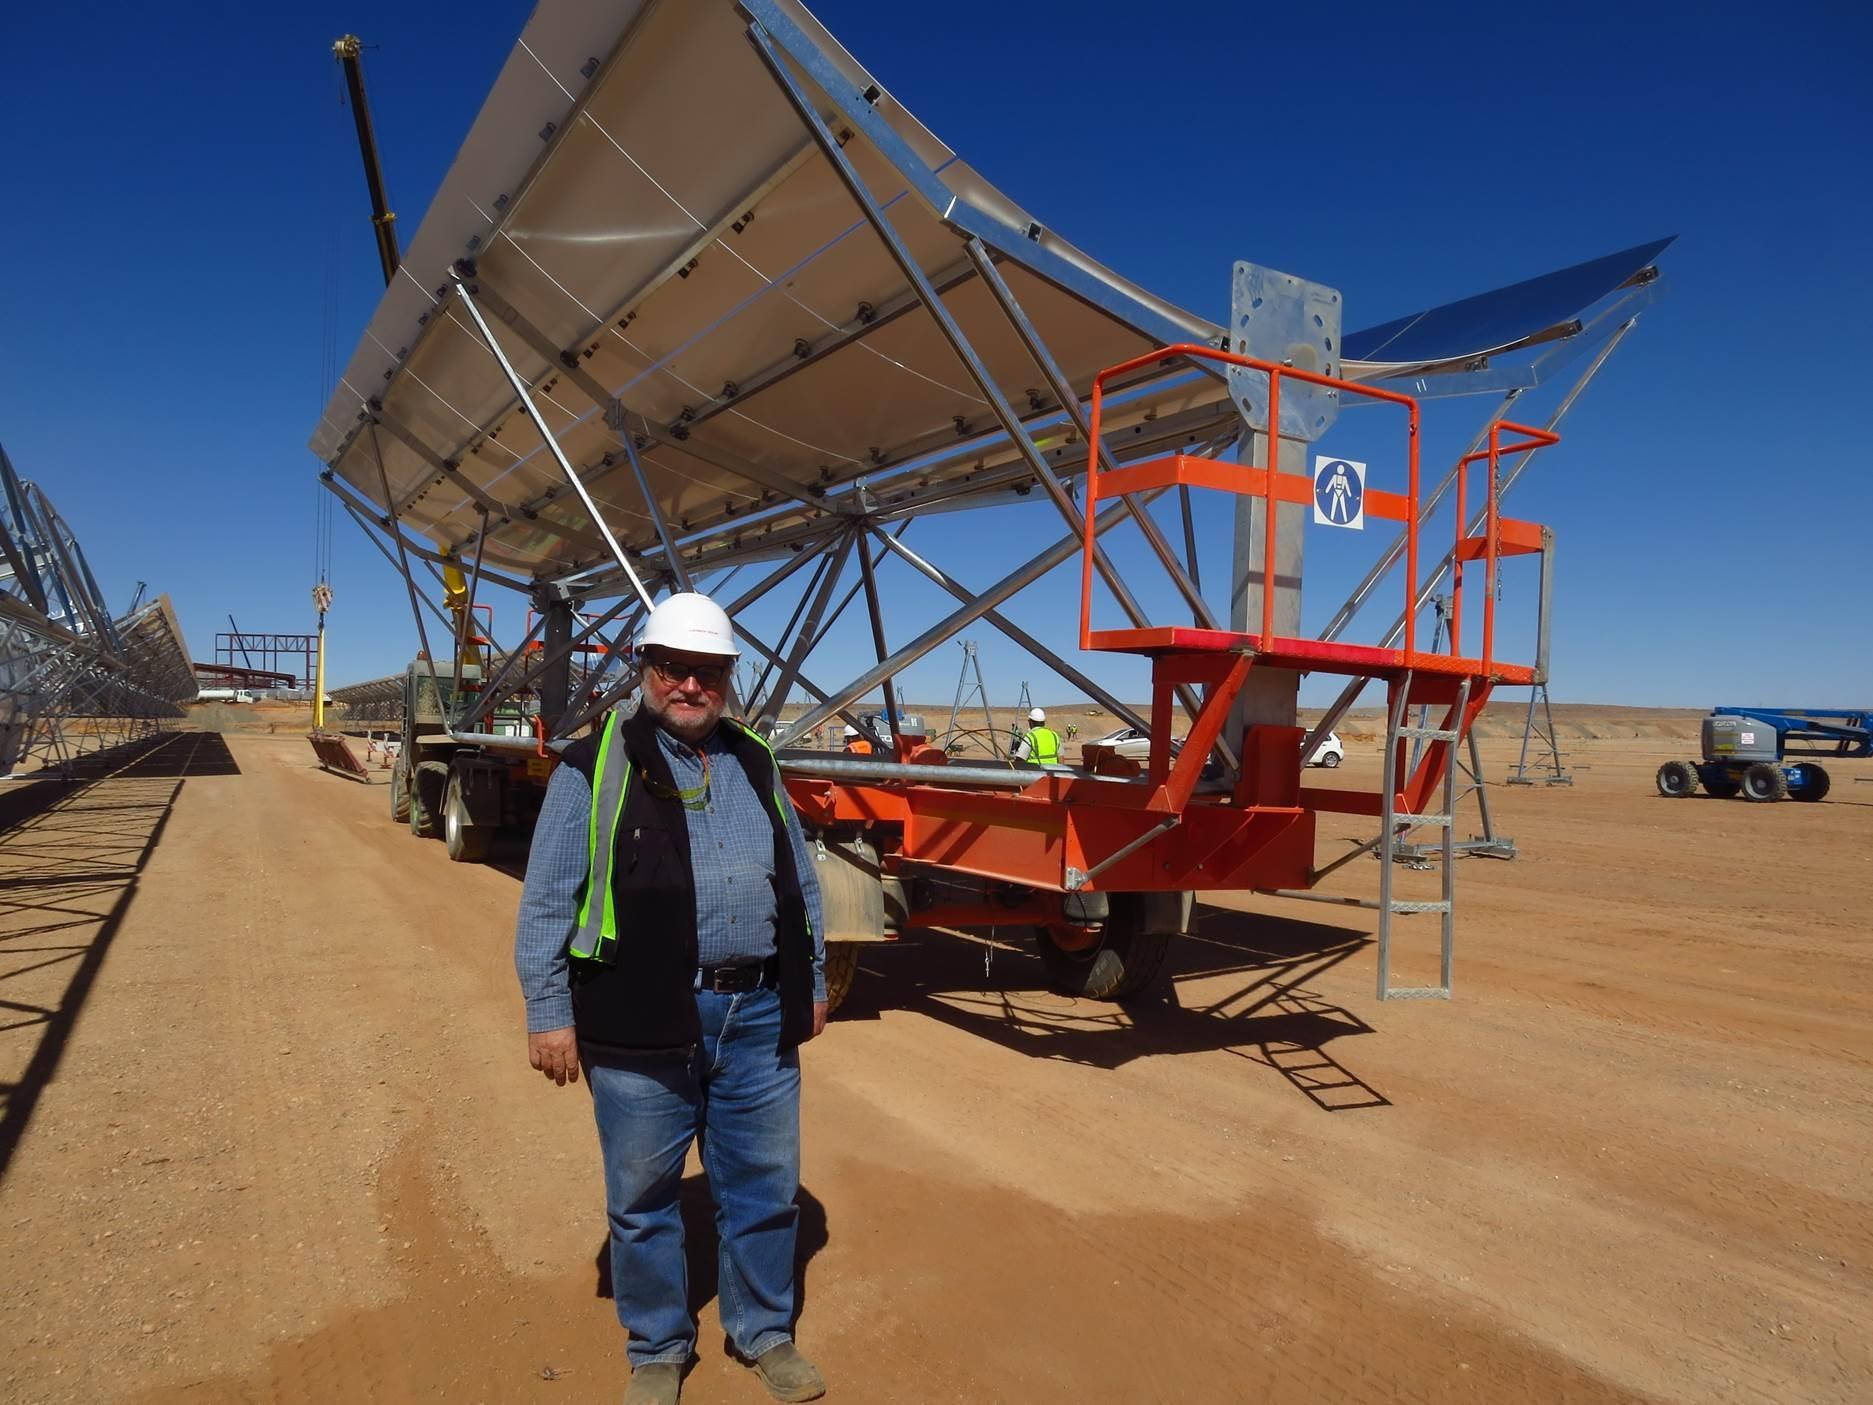 Solar power plant expert Michael Geyer